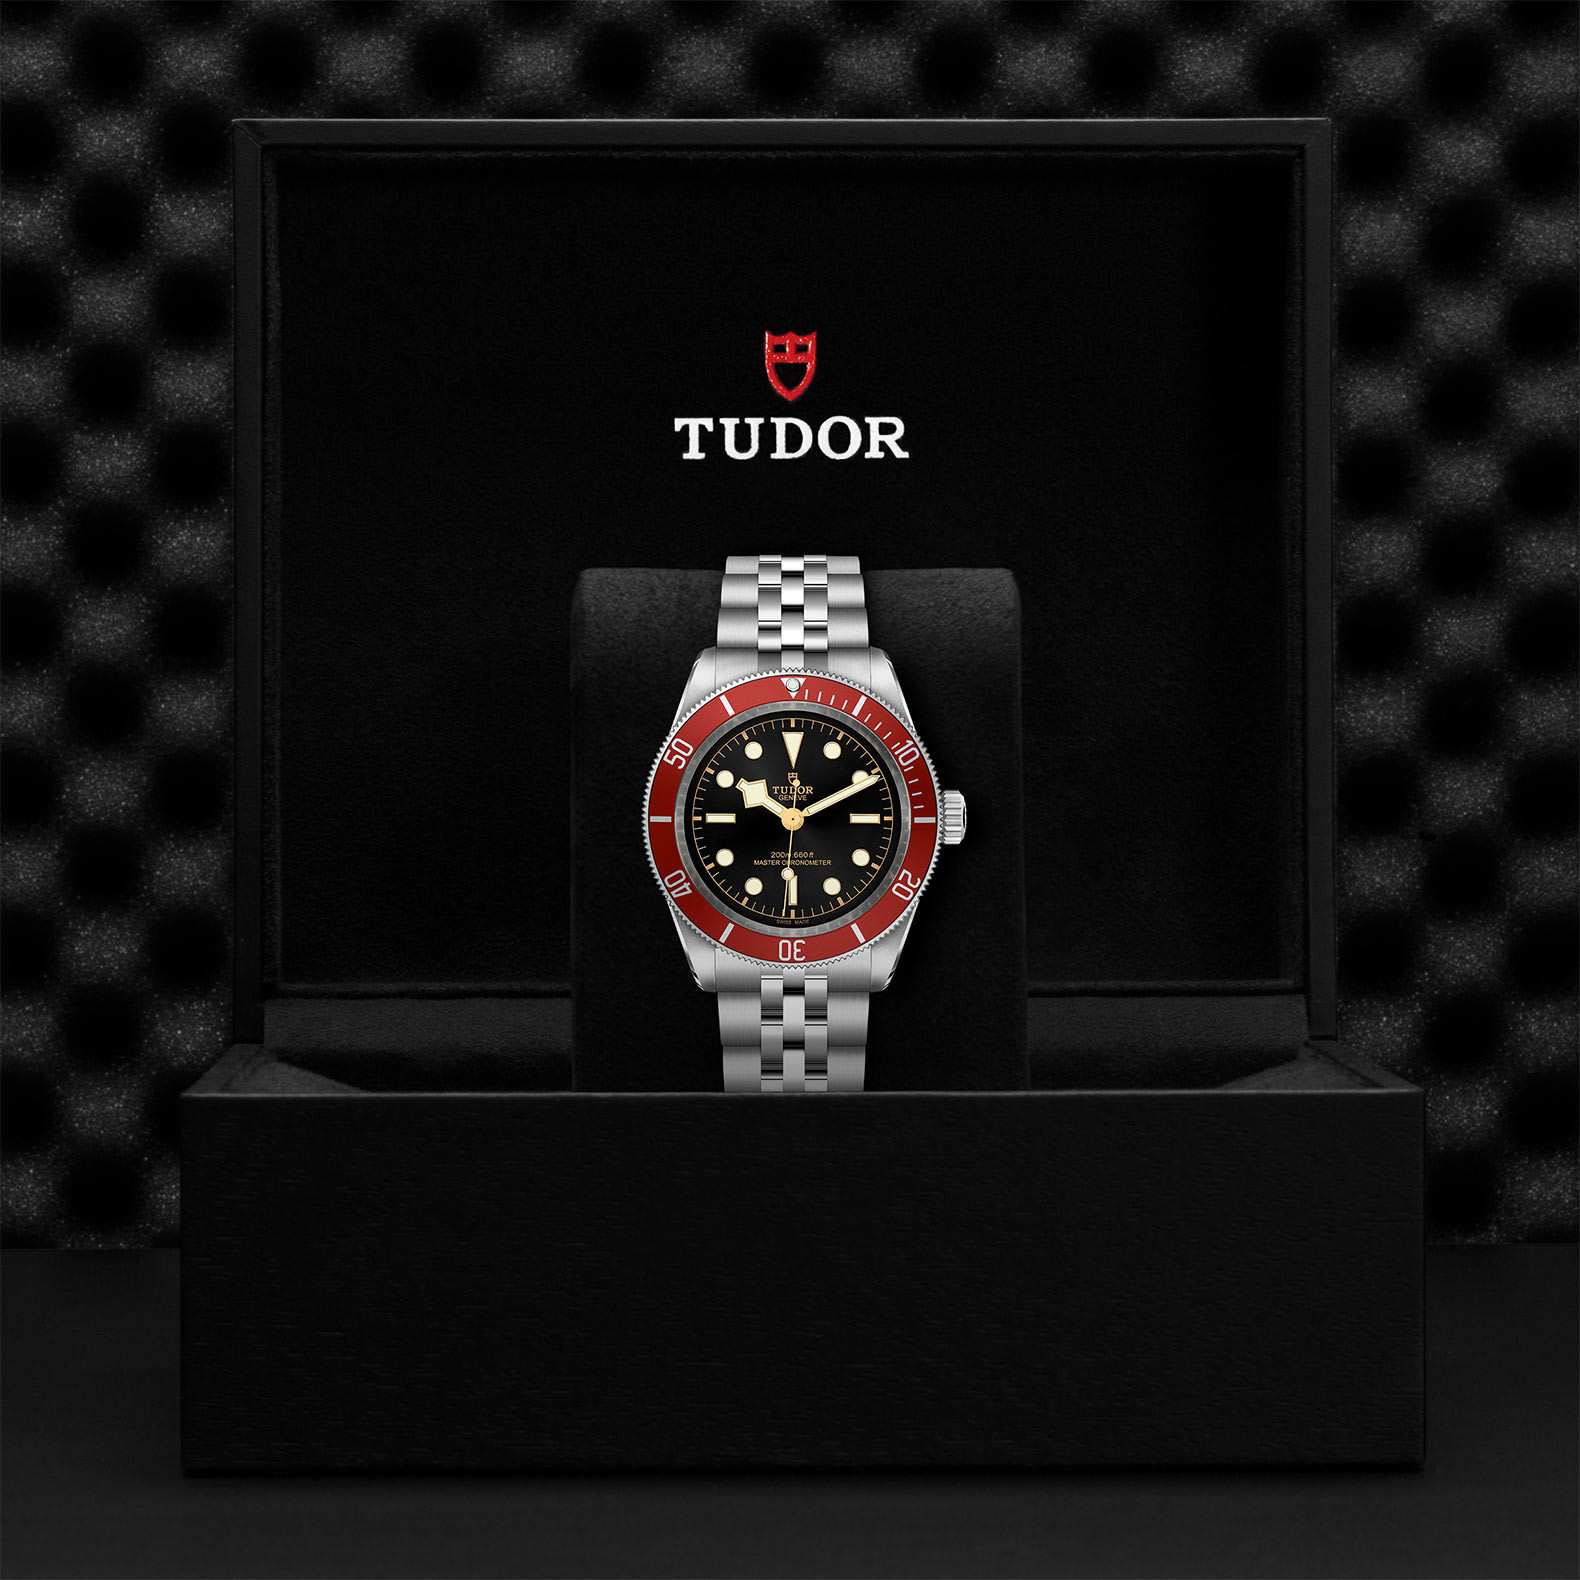 TUDOR Black Bay with 41mm Steel Case and Steel Bracelet M7941A1A0RU-0001 Watch in Presentation Box